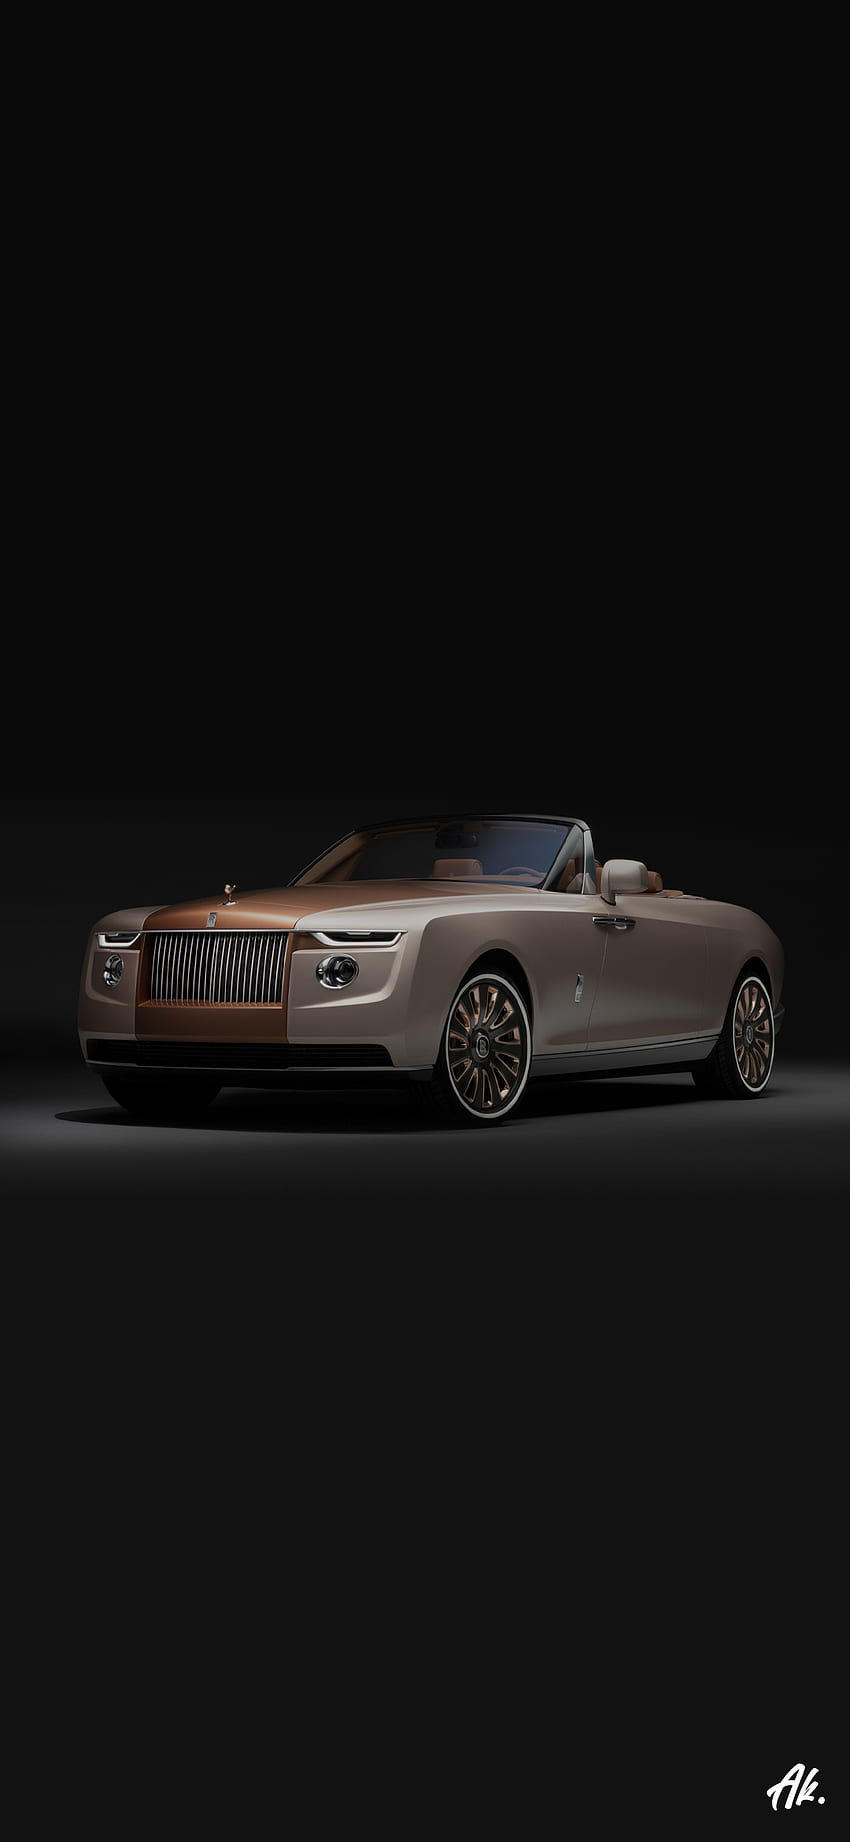 Rolls Royce brown, desain_otomotif, mobil, tren, hitam, gelap, mewah, matte, kendaraan wallpaper ponsel HD